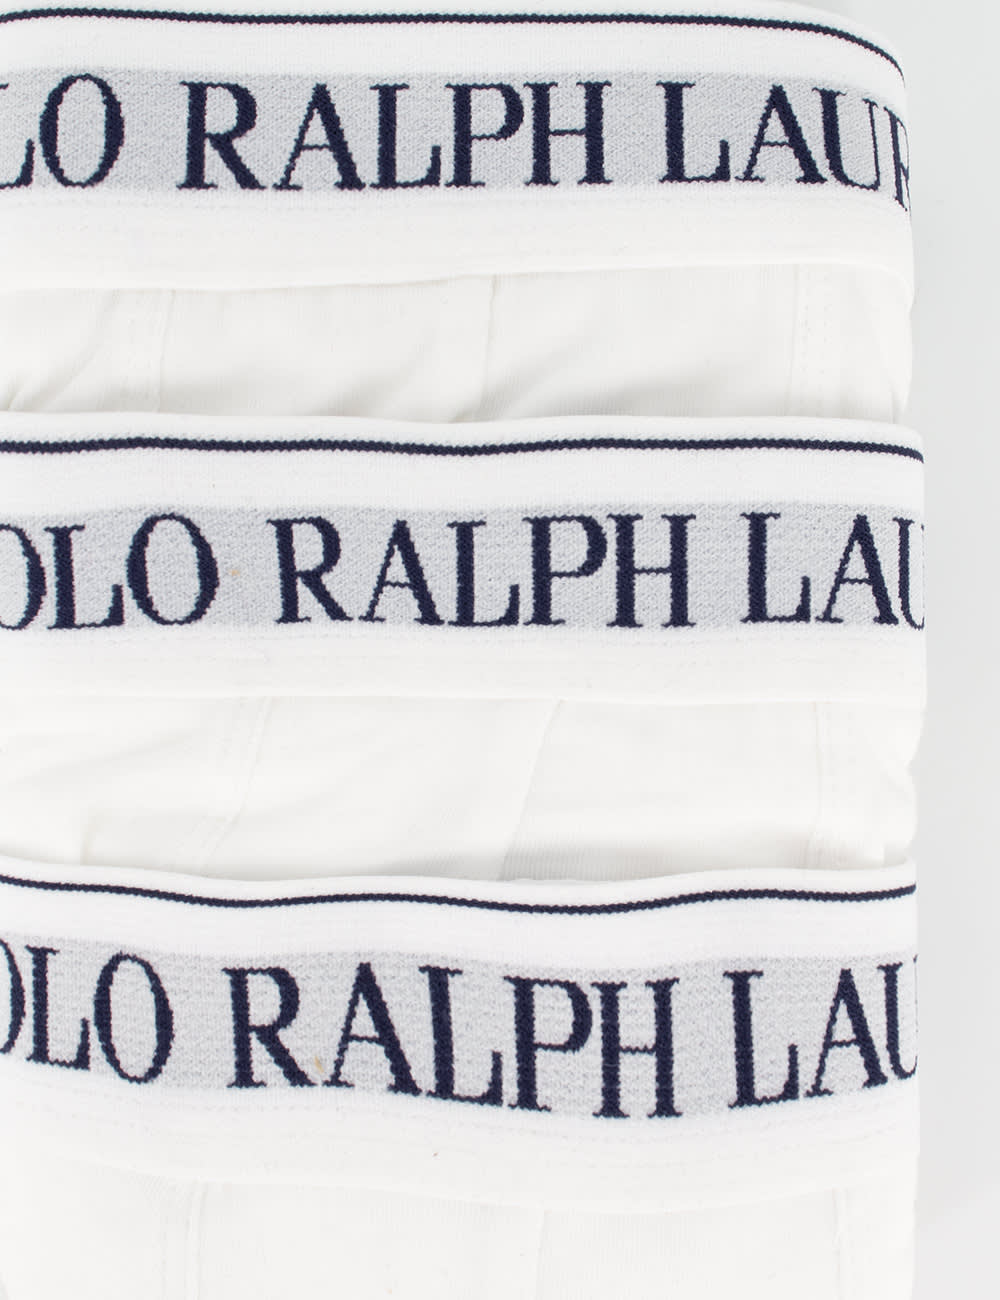 Shop Ralph Lauren Boxer In White